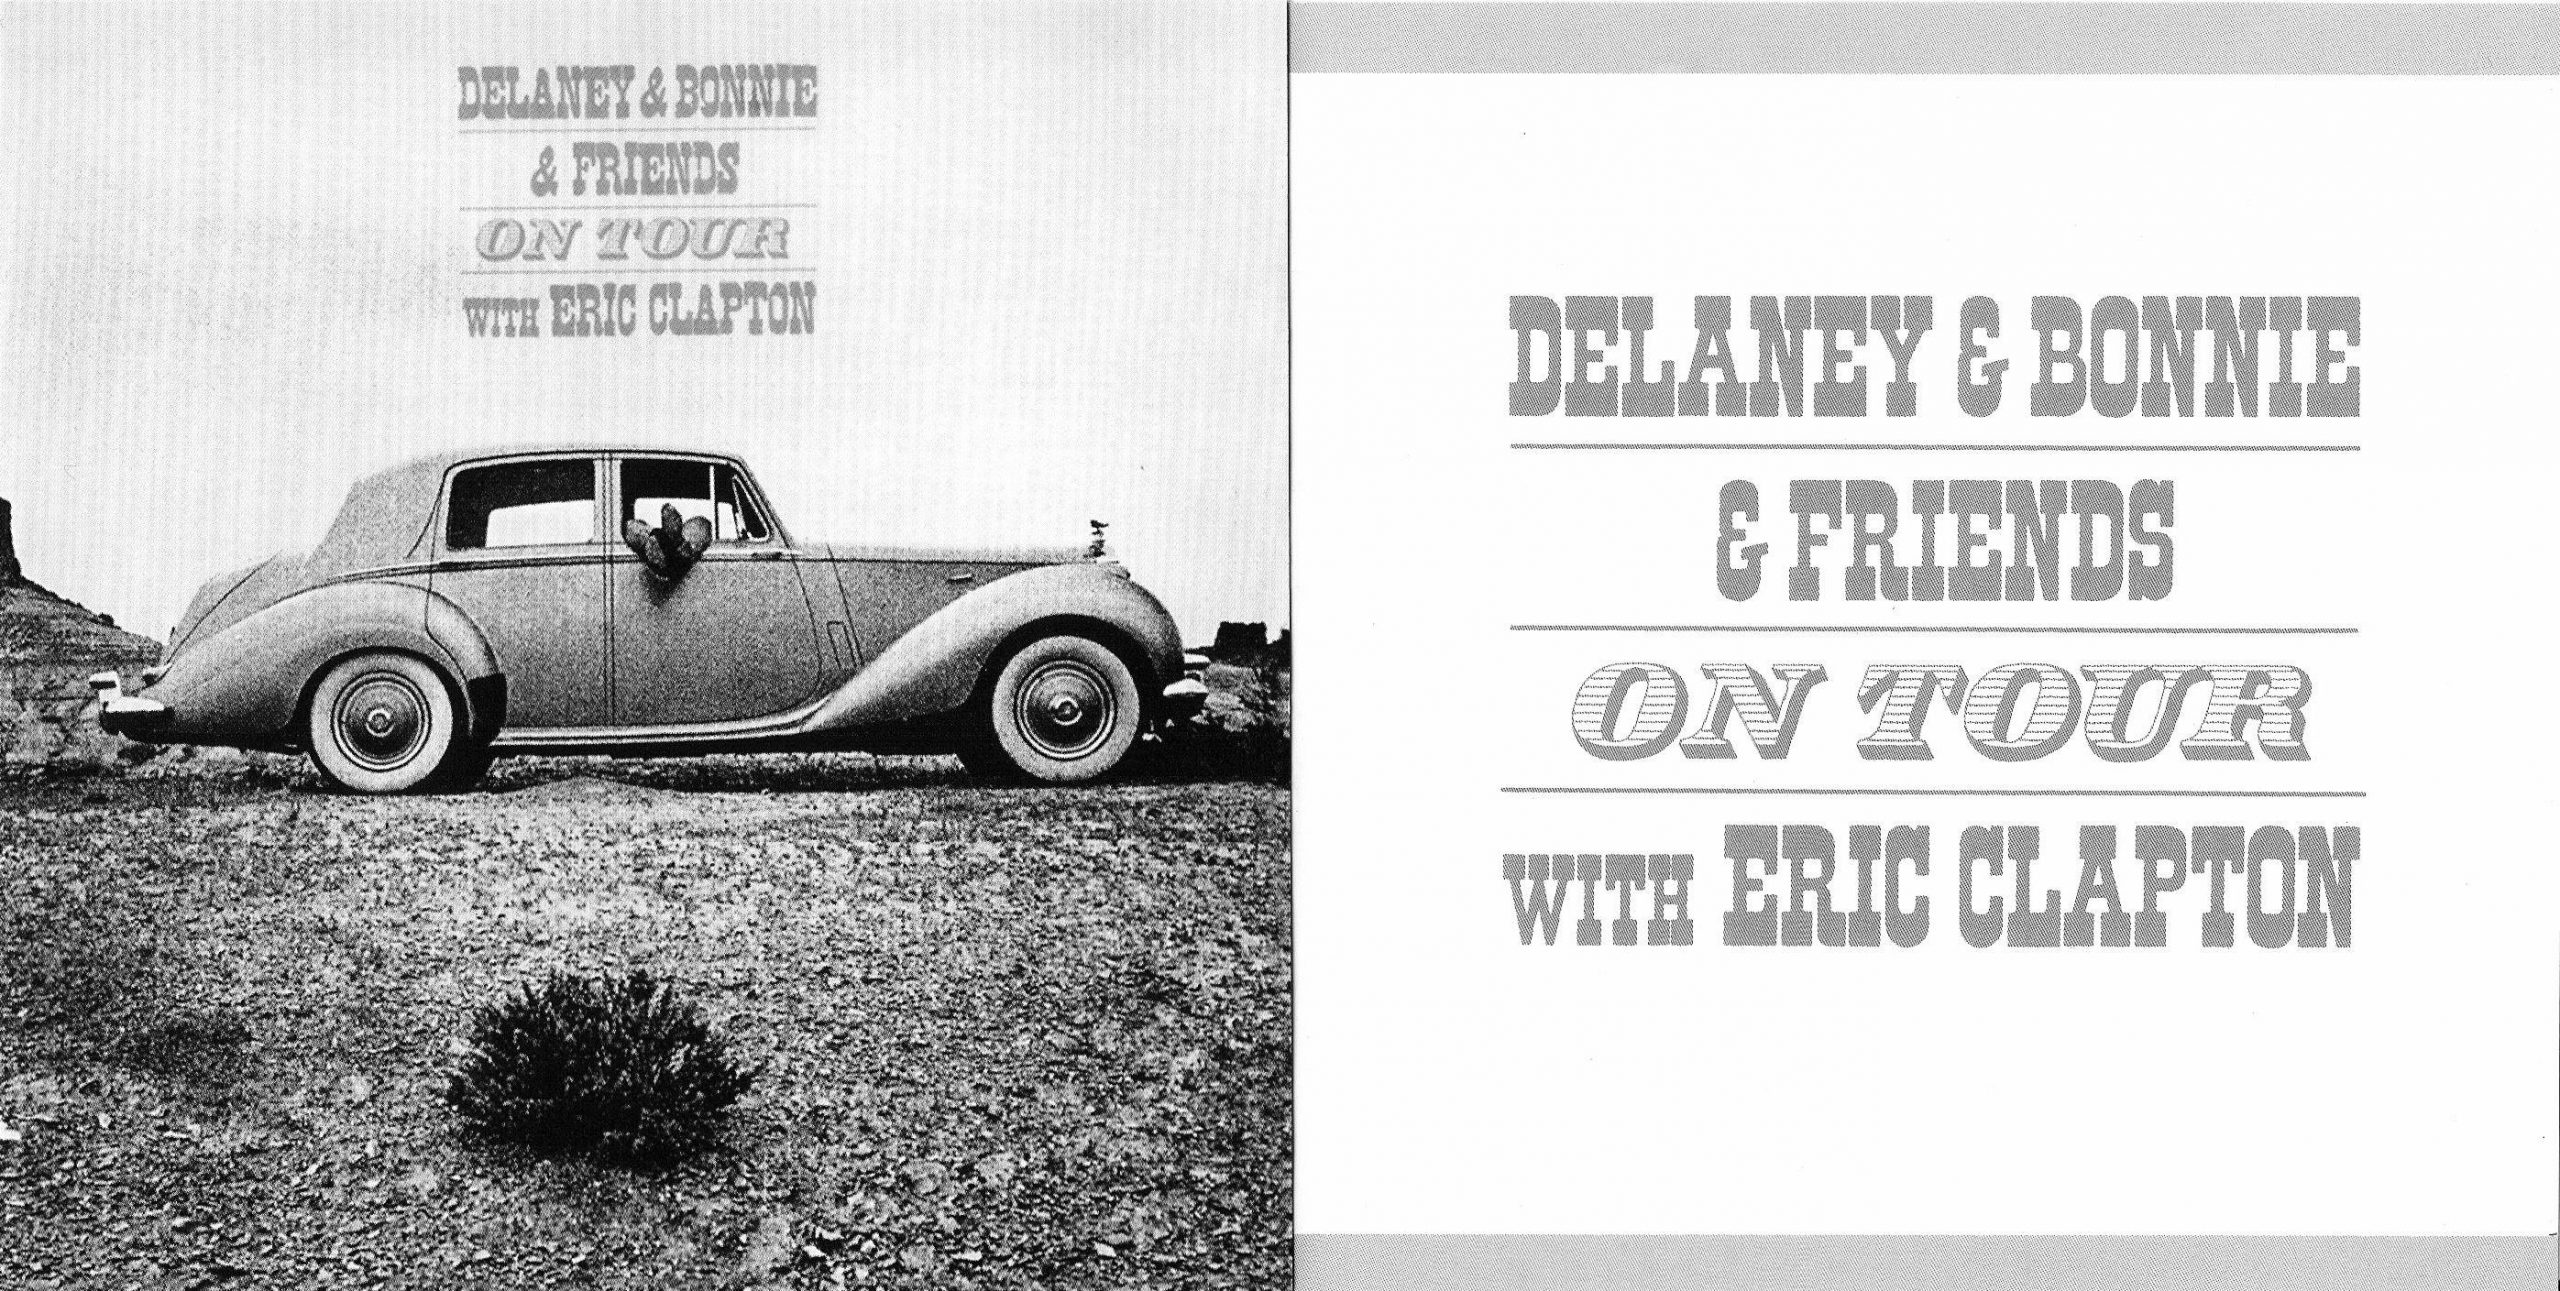 1970er Albumcover: "Delaney & Bonnie & Friends On Tour with Eric Clapton"